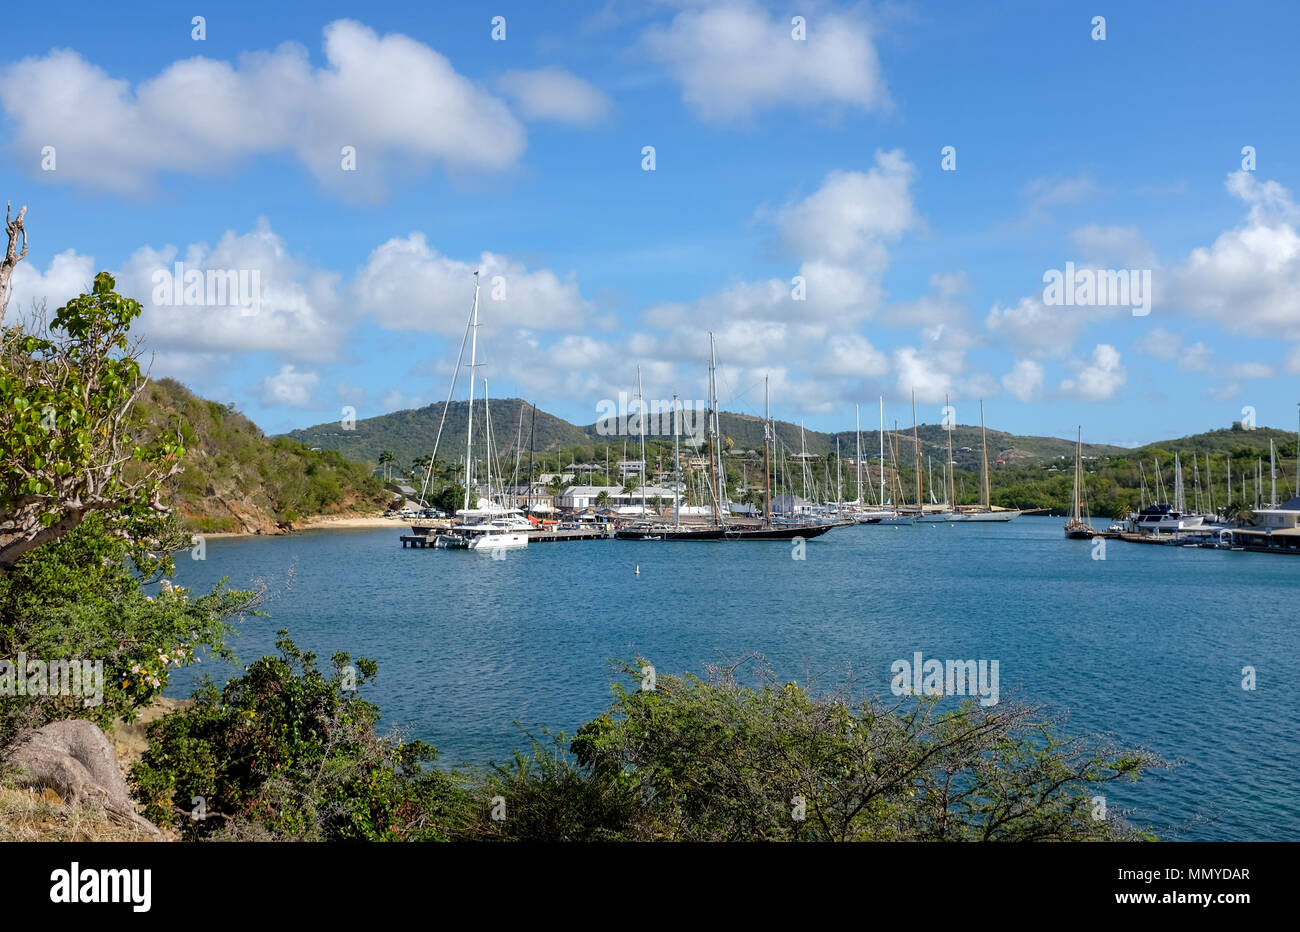 Antigua Piccole Antille isole dei Caraibi West Indies - yacht ormeggiati nel porto inglese per Antigua Sailing Week Foto Stock